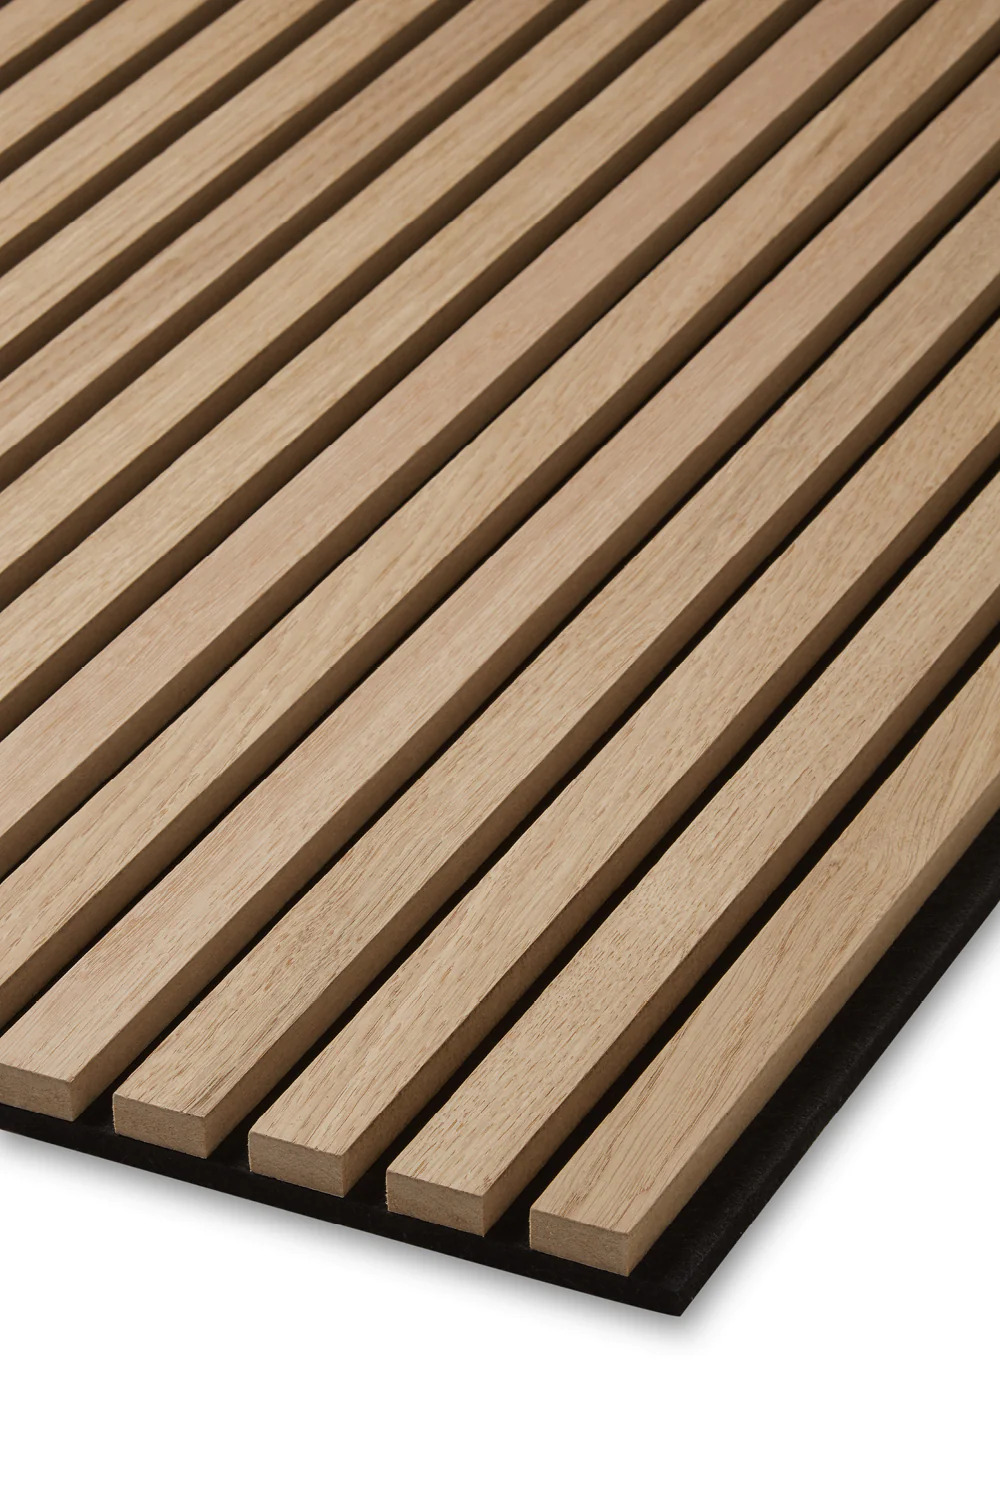 Nord Slat - White Oak Wood Slat Wall Panel